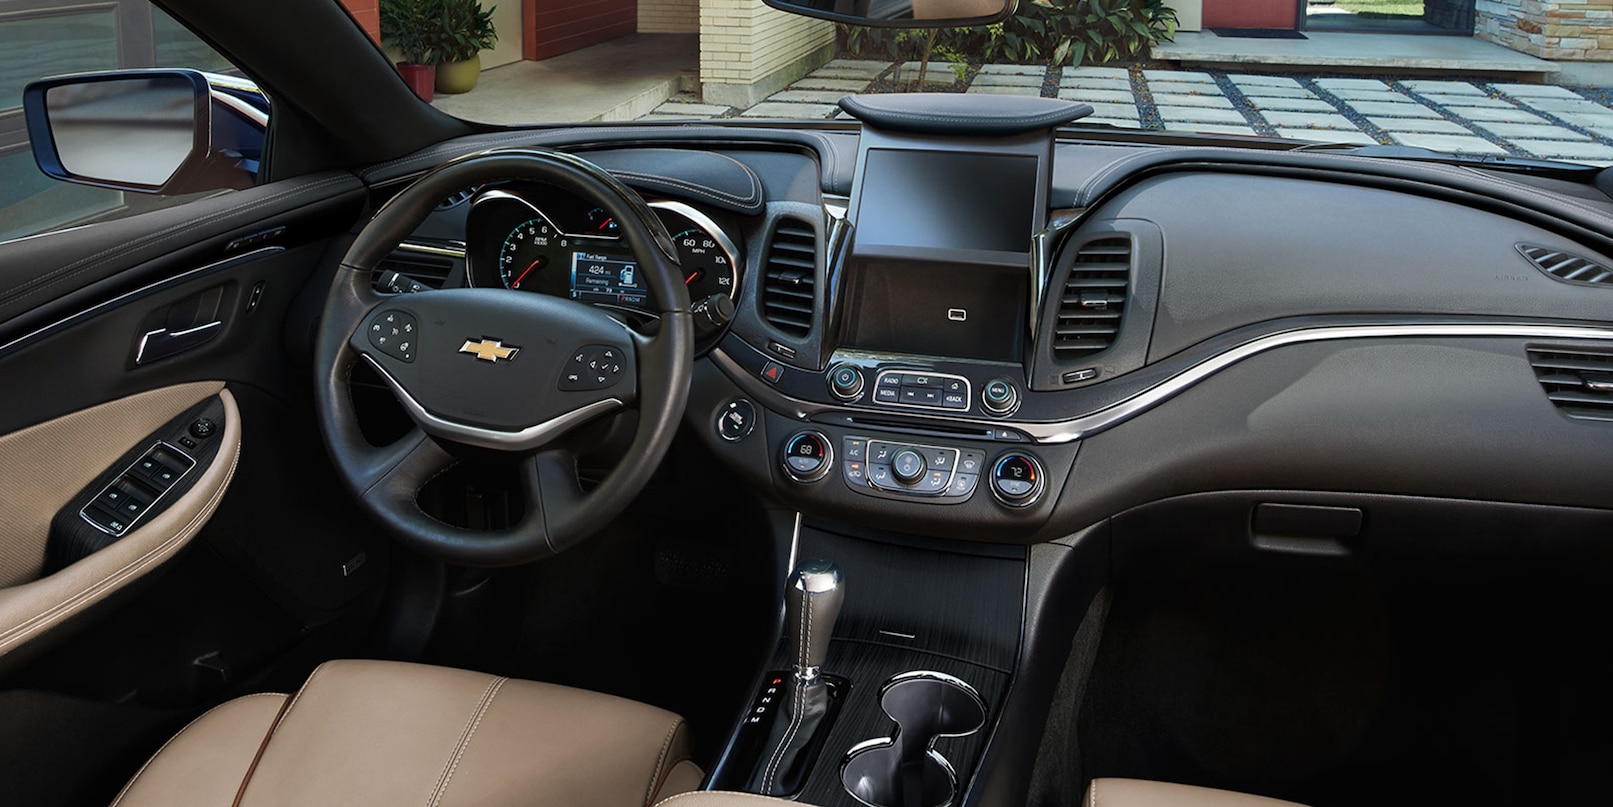 Revving Up the Road: 2019 Chevrolet Impala Reviews